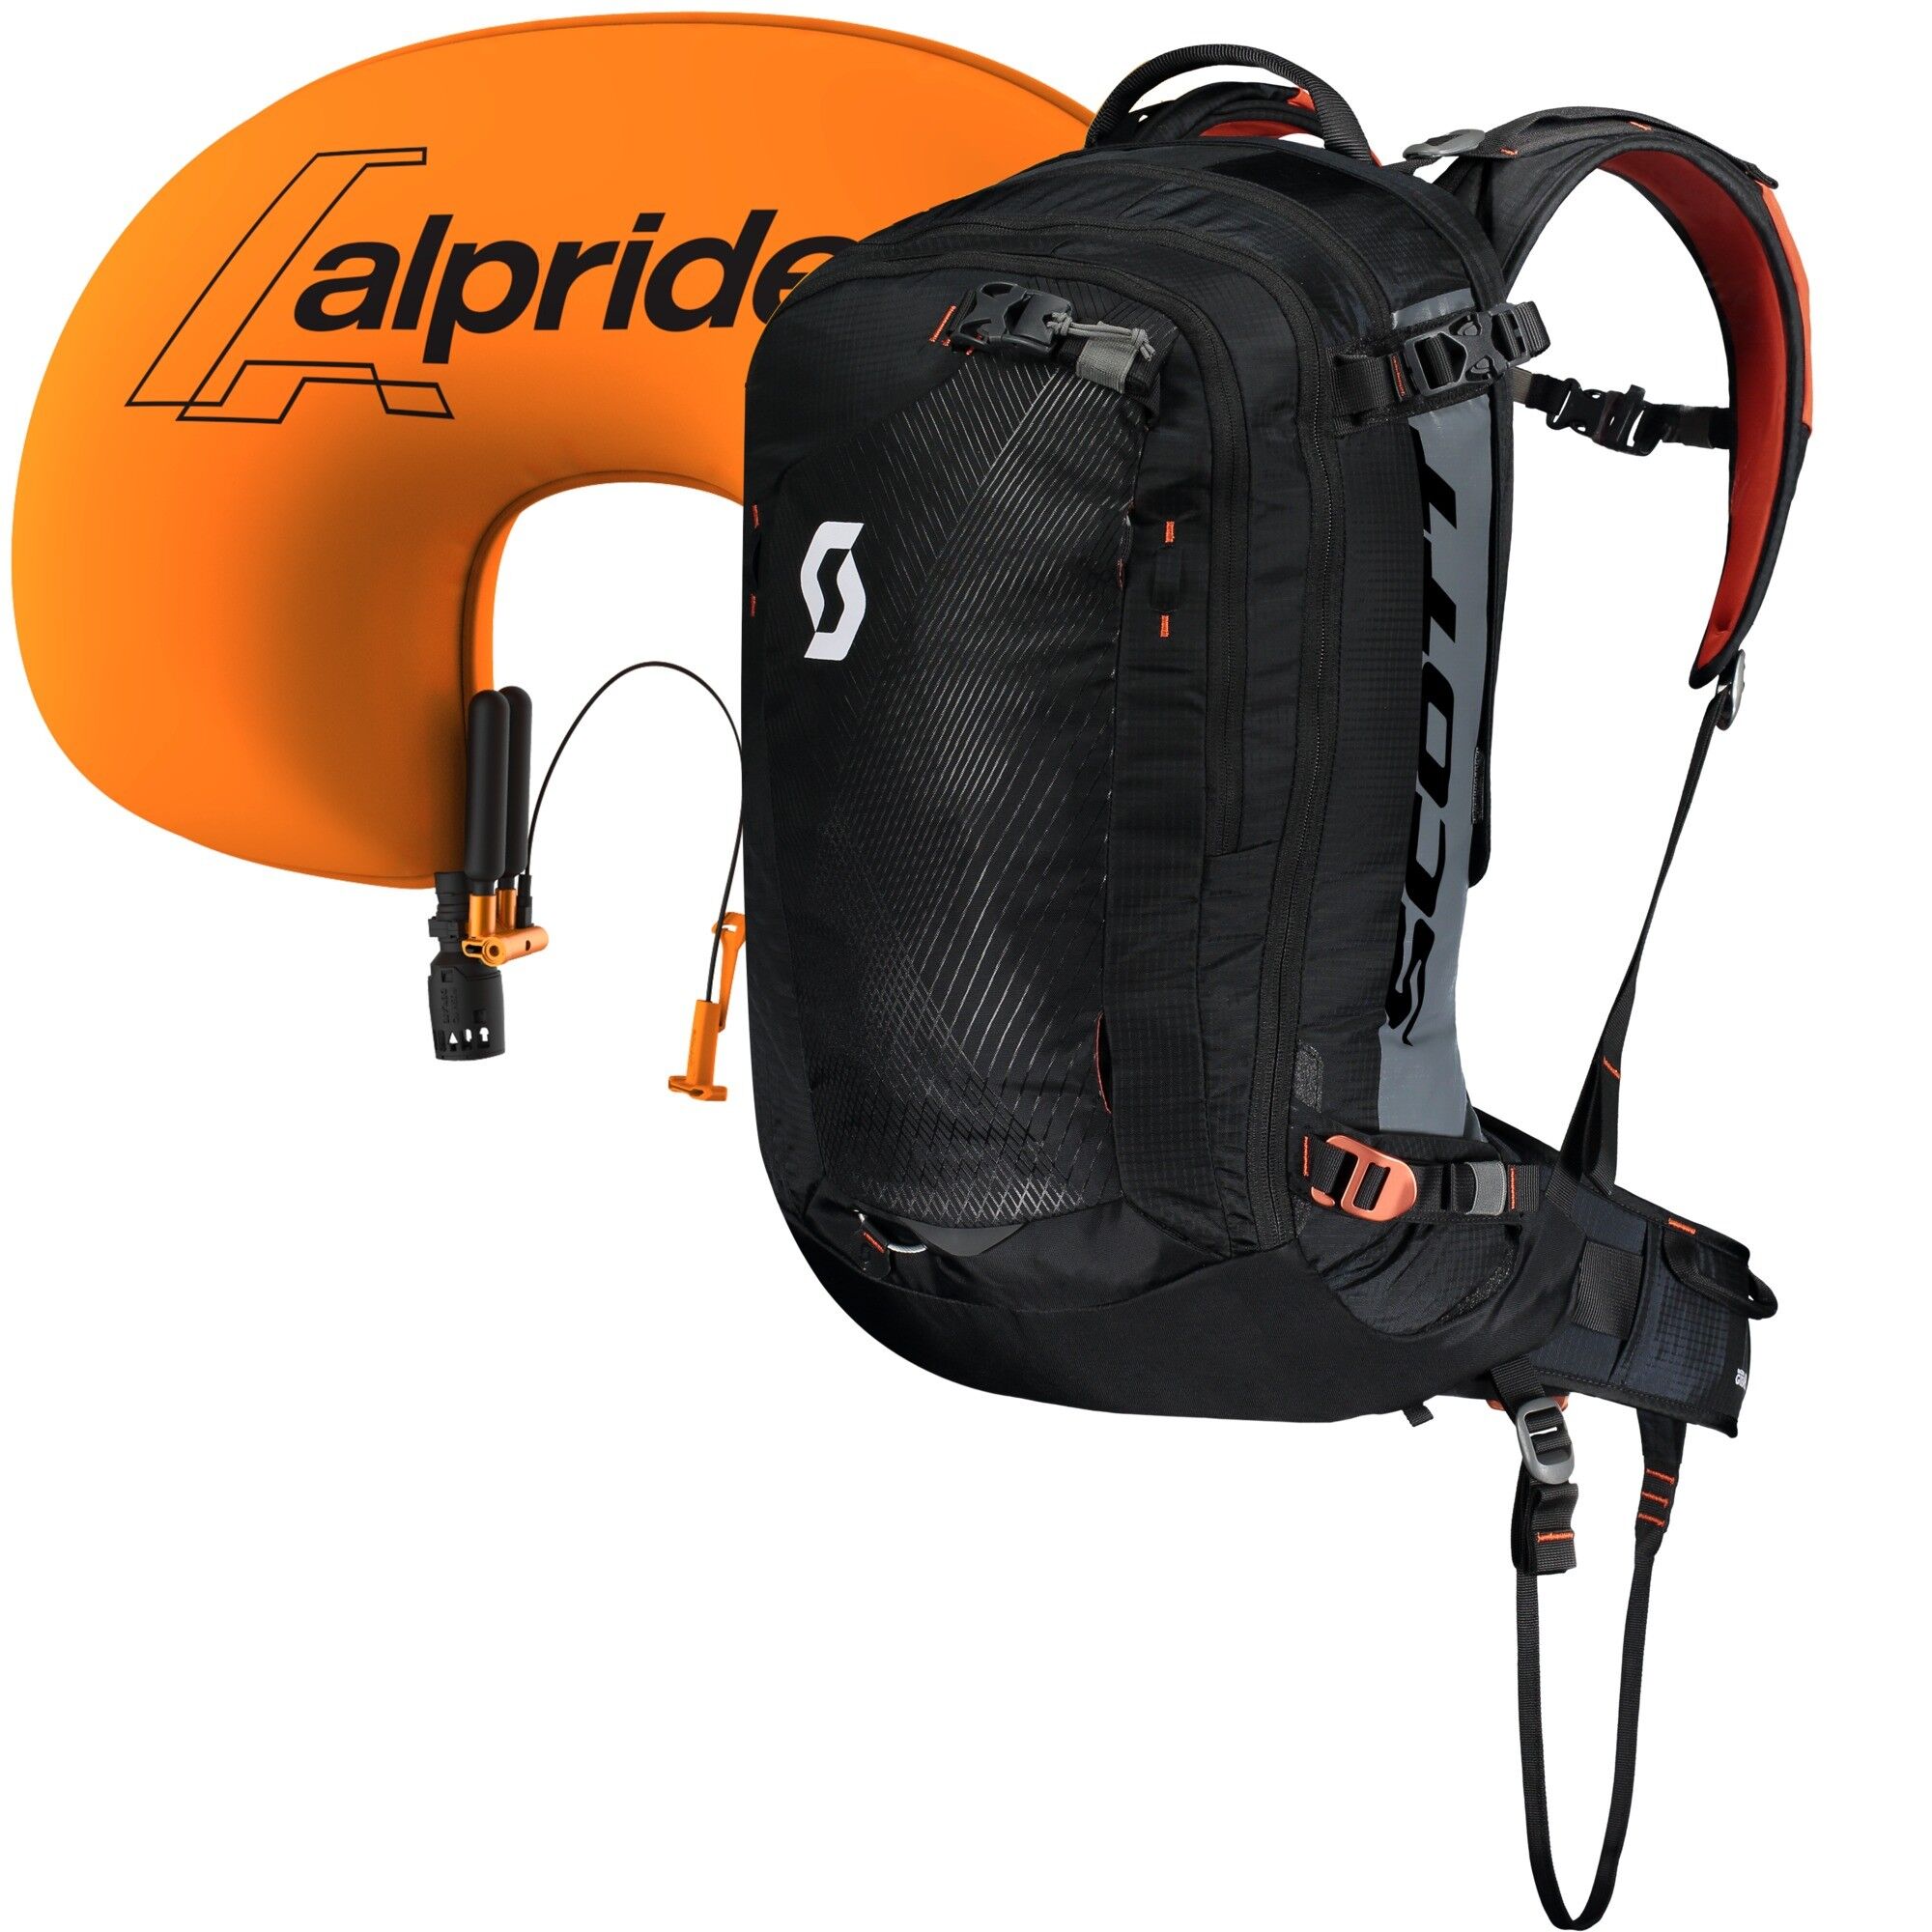 Scott Guide AP 30 Kit - Avalanche airbag backpack